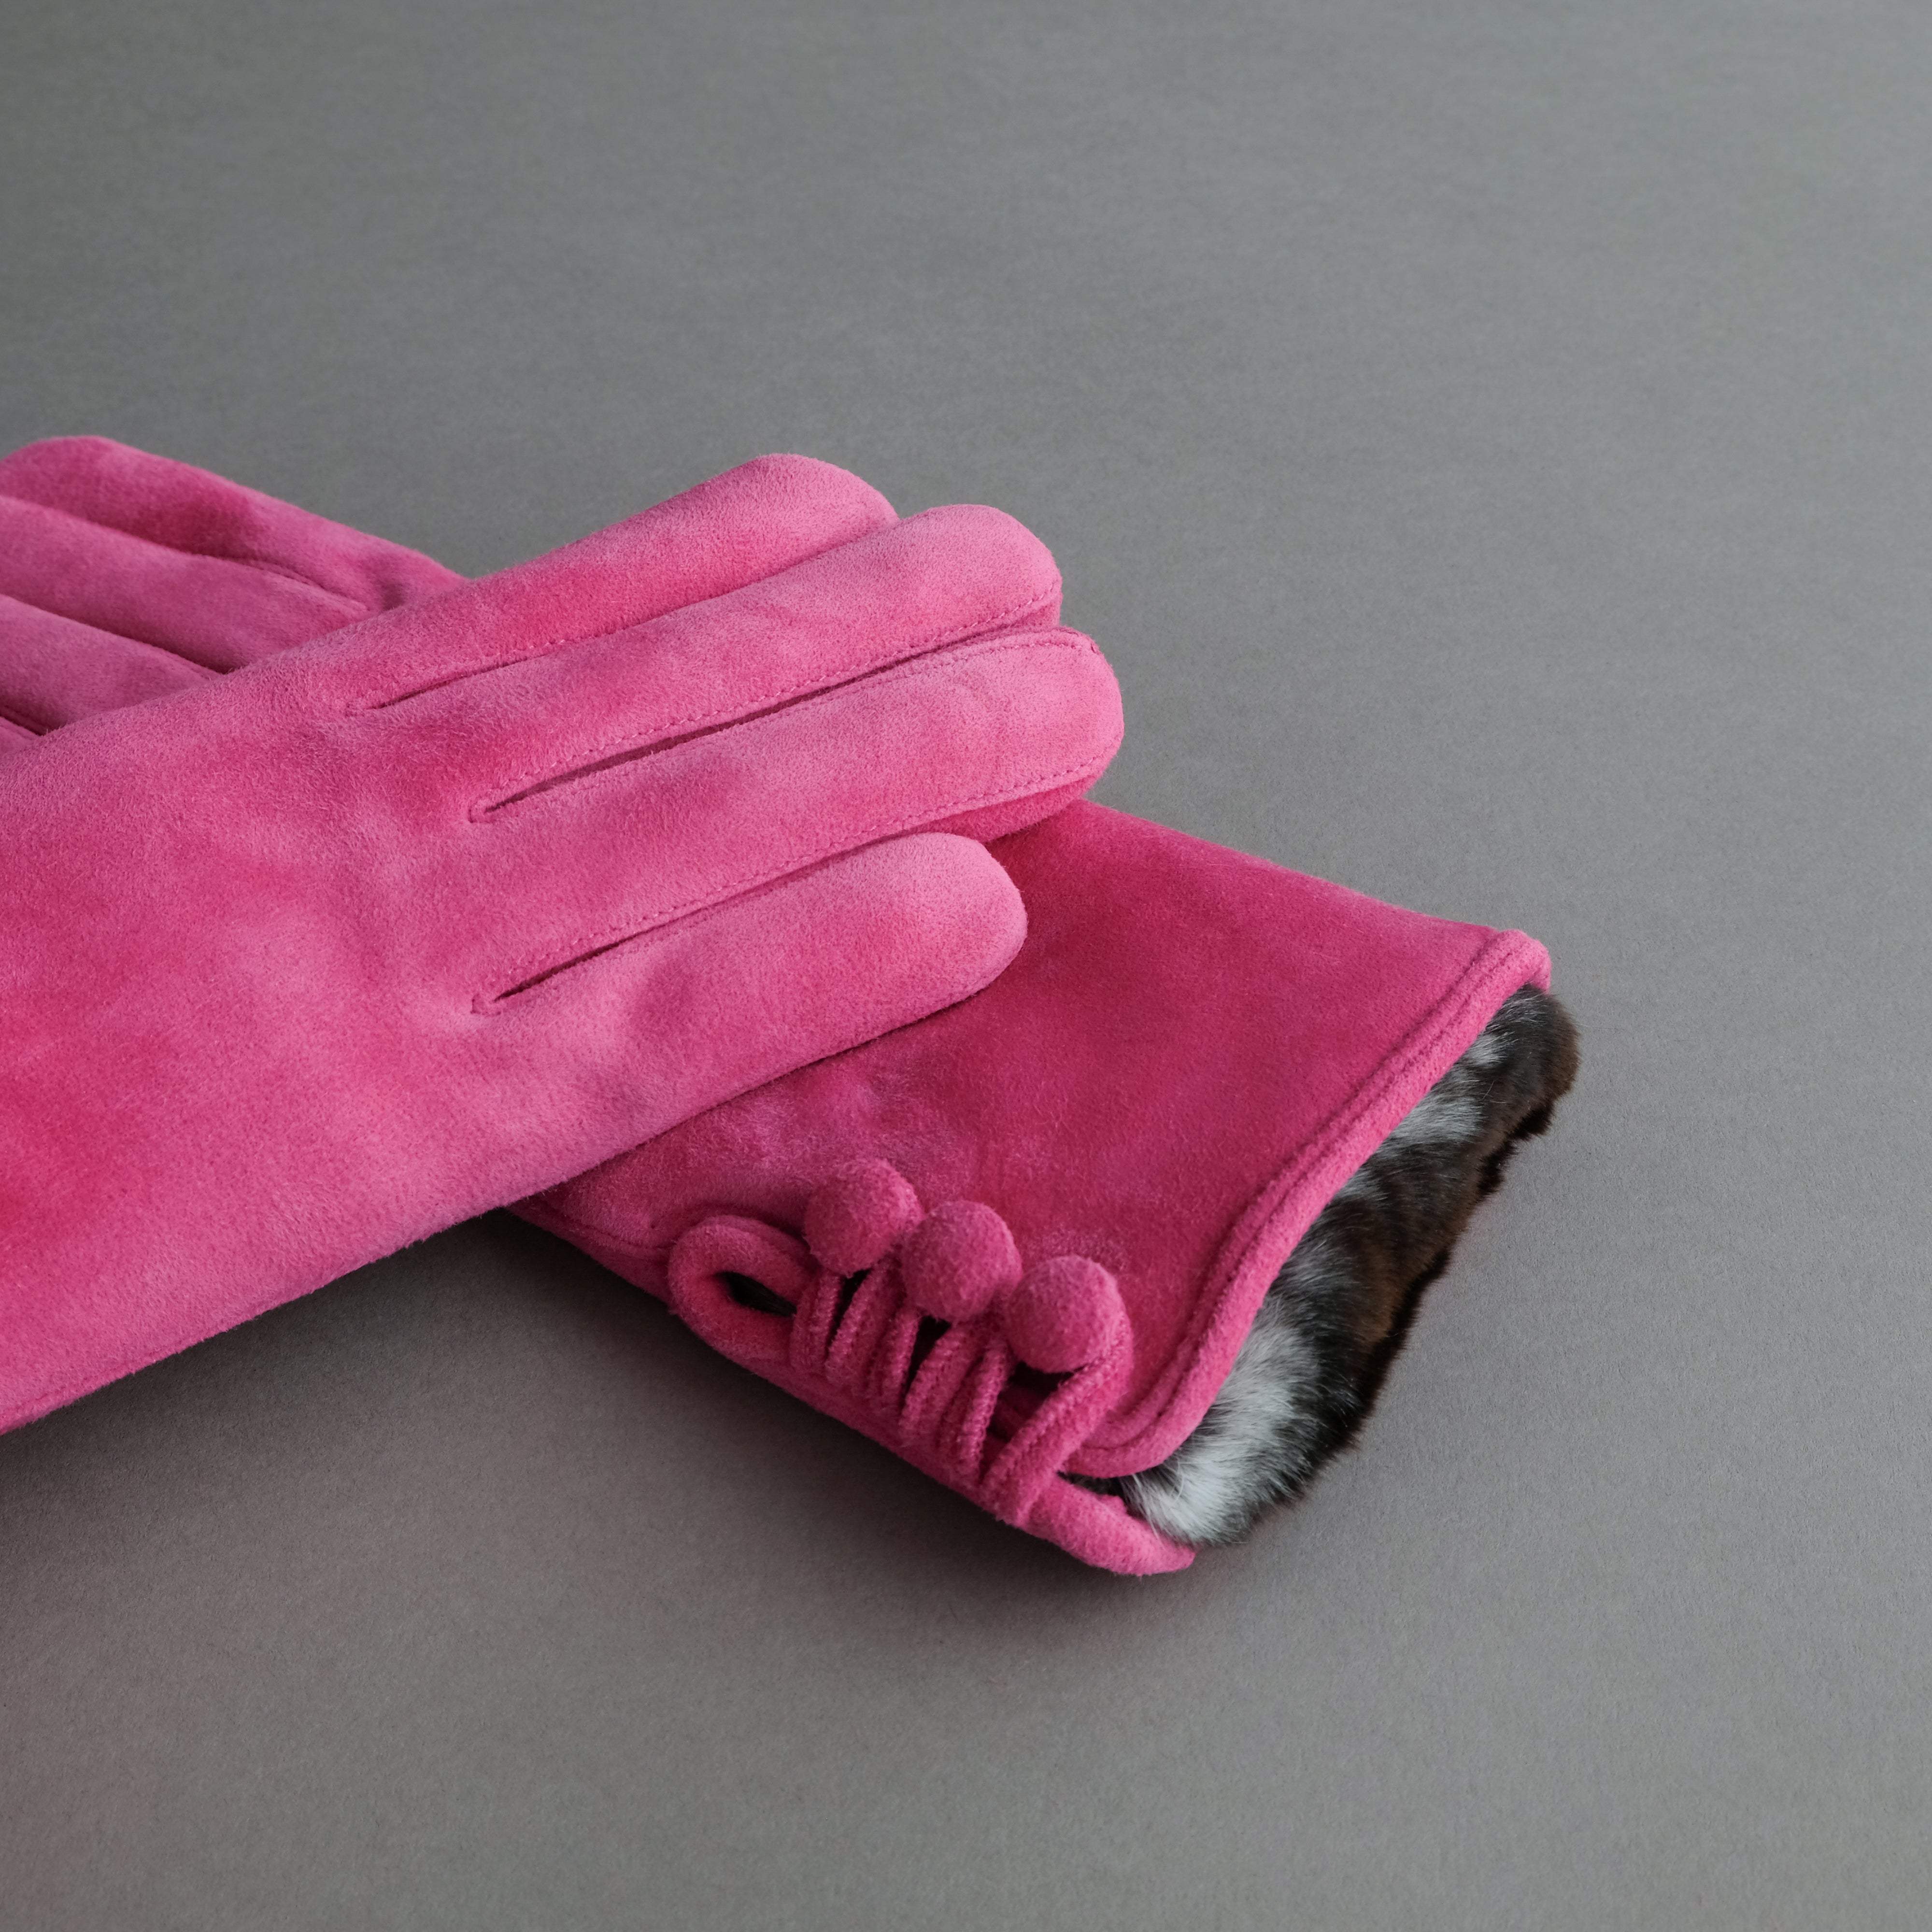 Ladies Gloves from Pink Reindeer Suede with Orylag Cuffs - TR Handschuhe Wien - Thomas Riemer Handmade Gloves